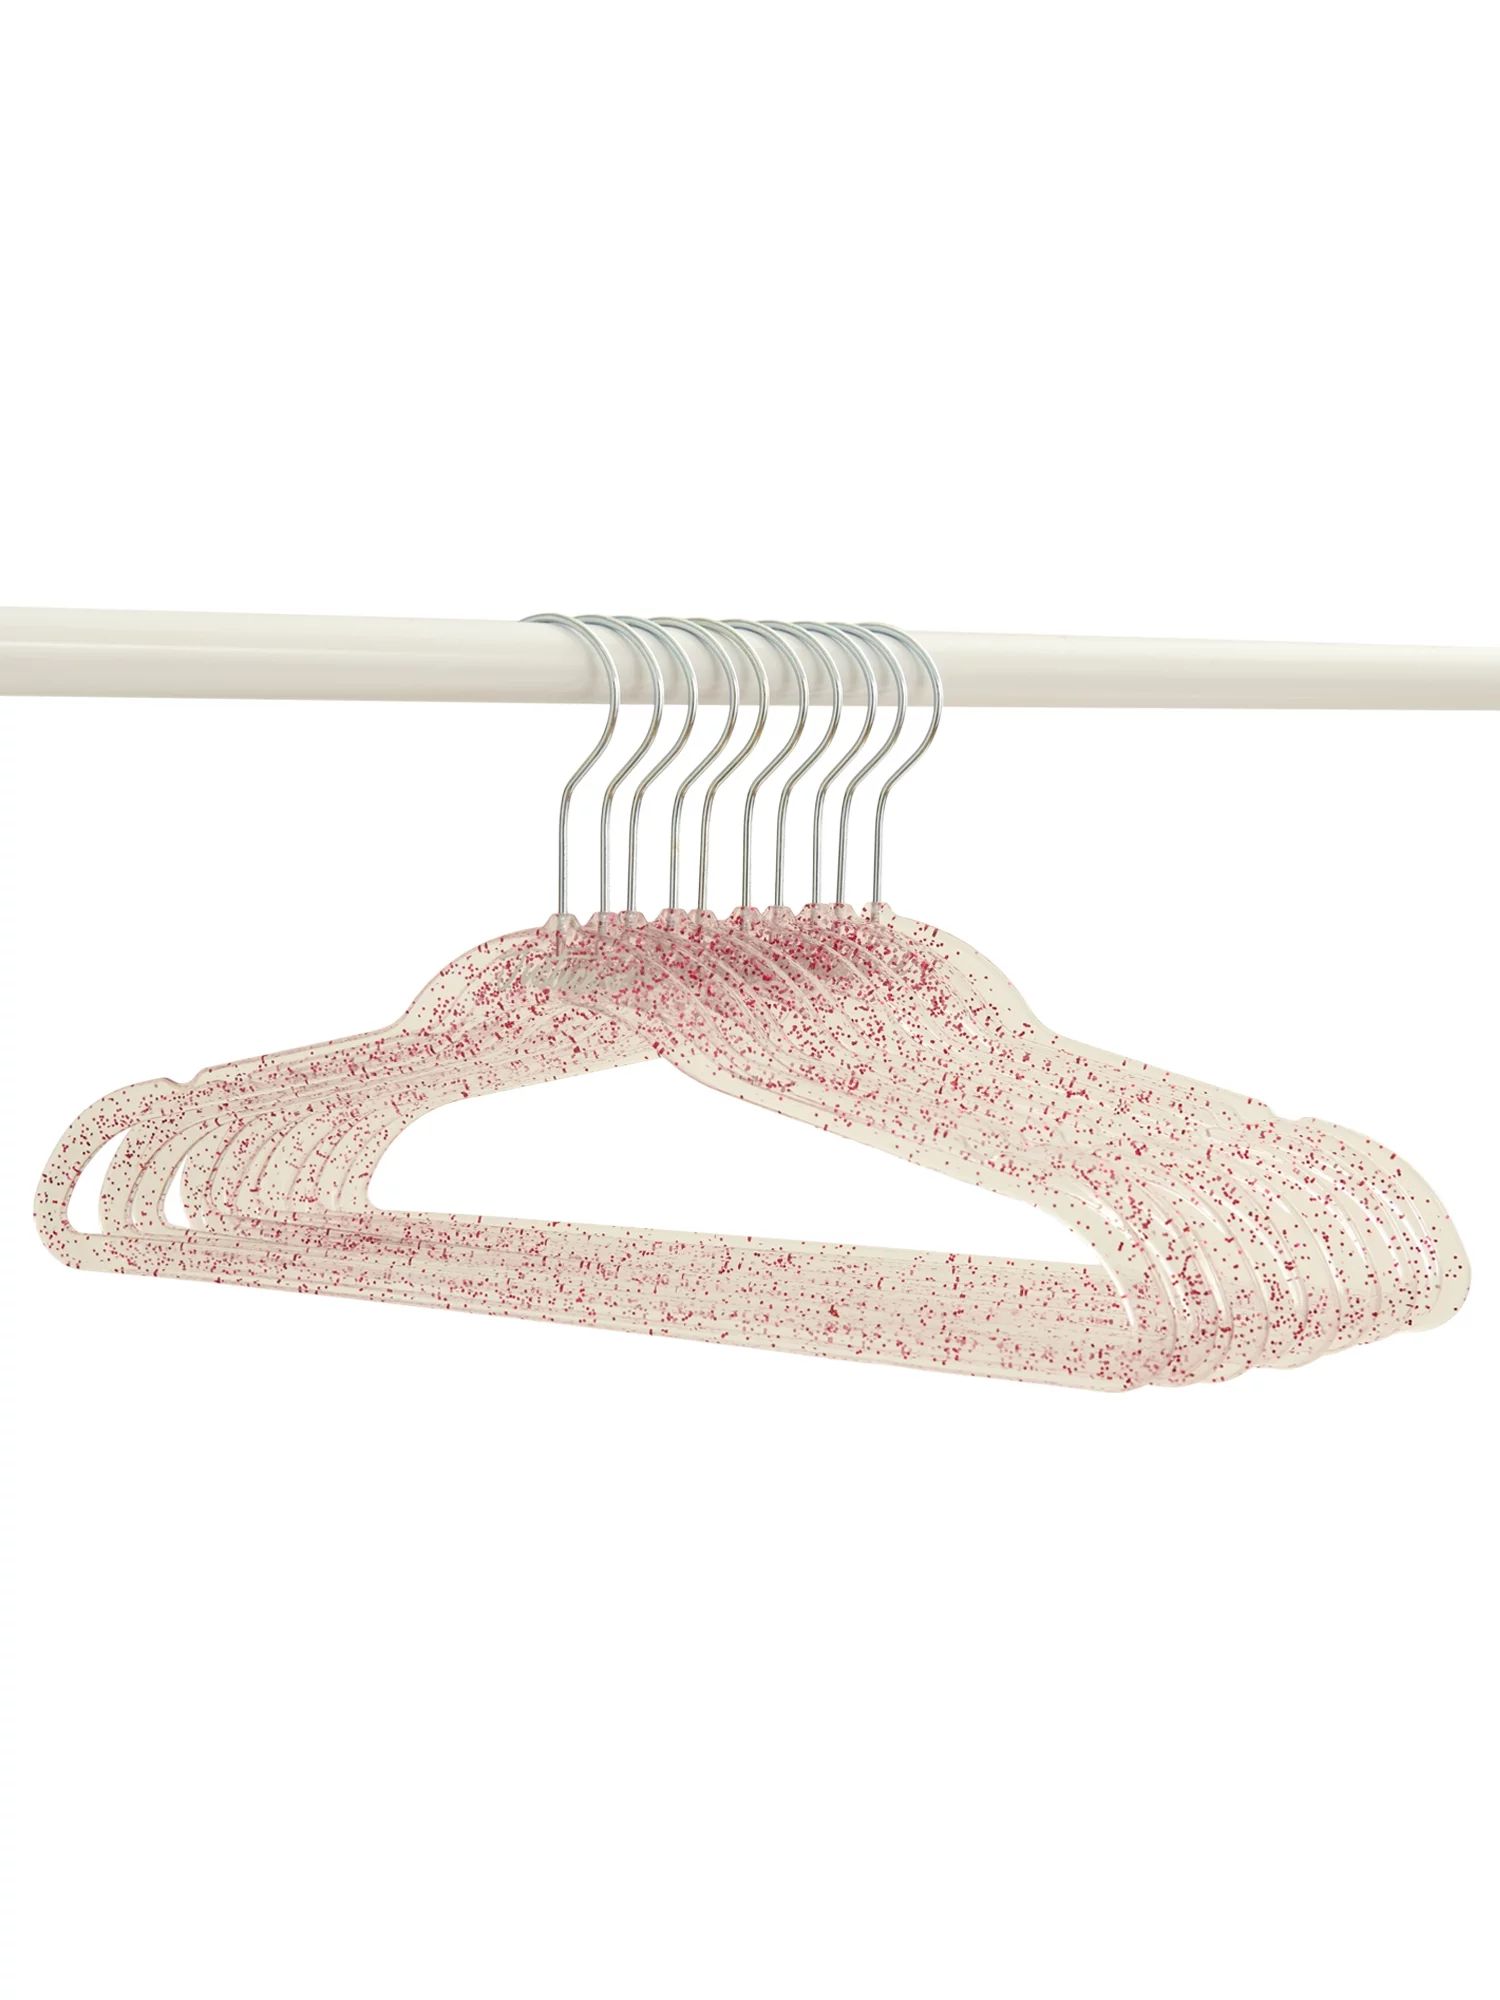 Justice Girls Non-Slip Swivel Hook Clothes Hangers, Pink Glitter, 100 Pack | Walmart (US)